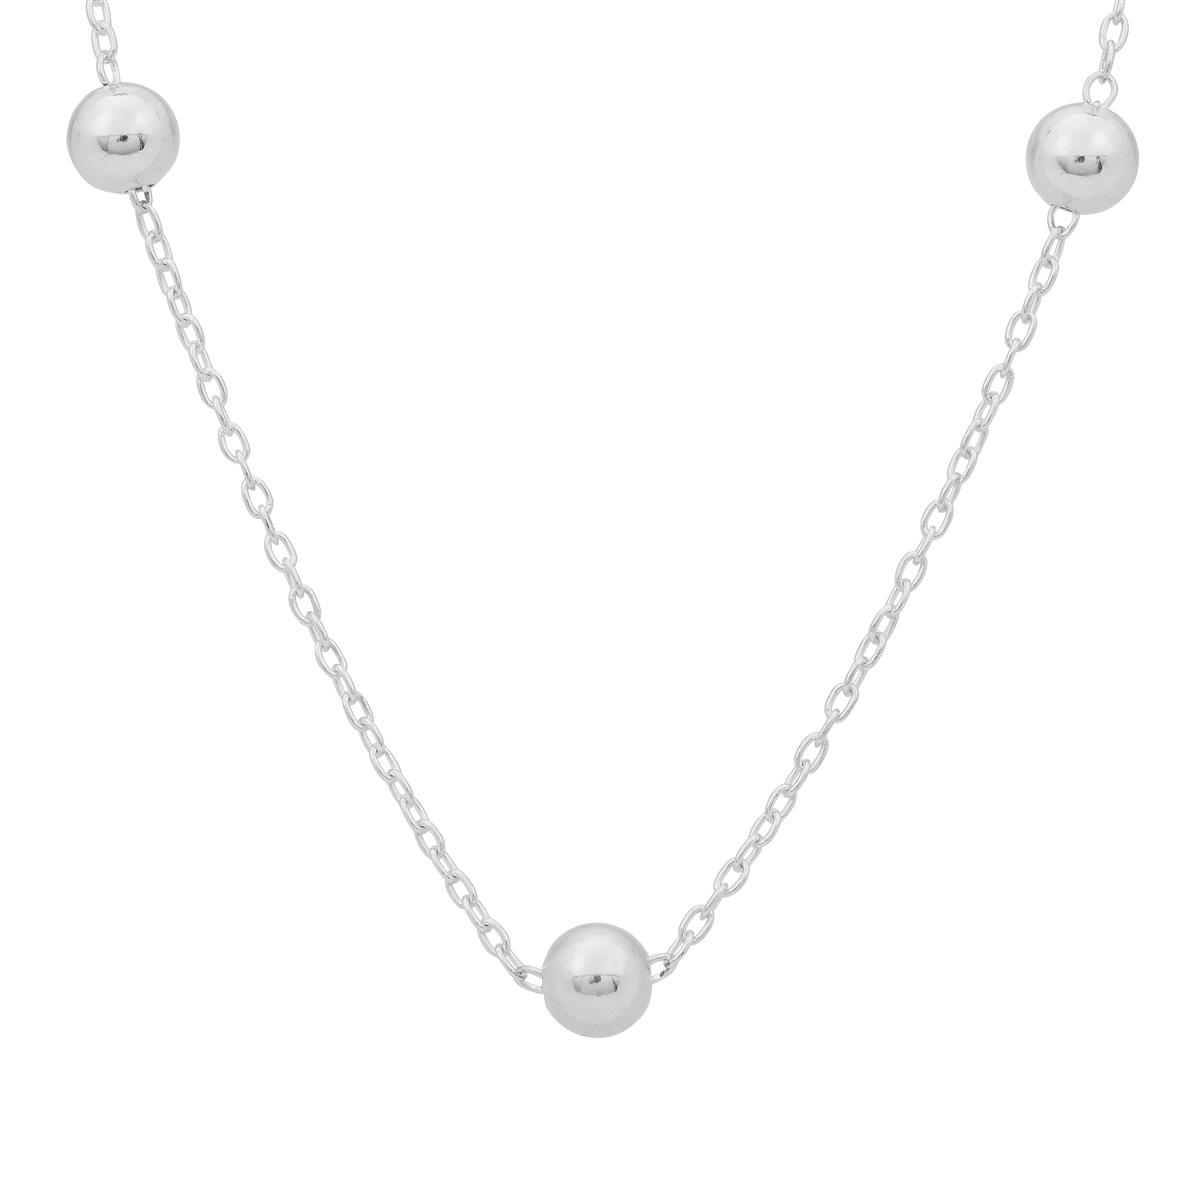 Buy Daniel Klein Silver Color Necklace for Women online